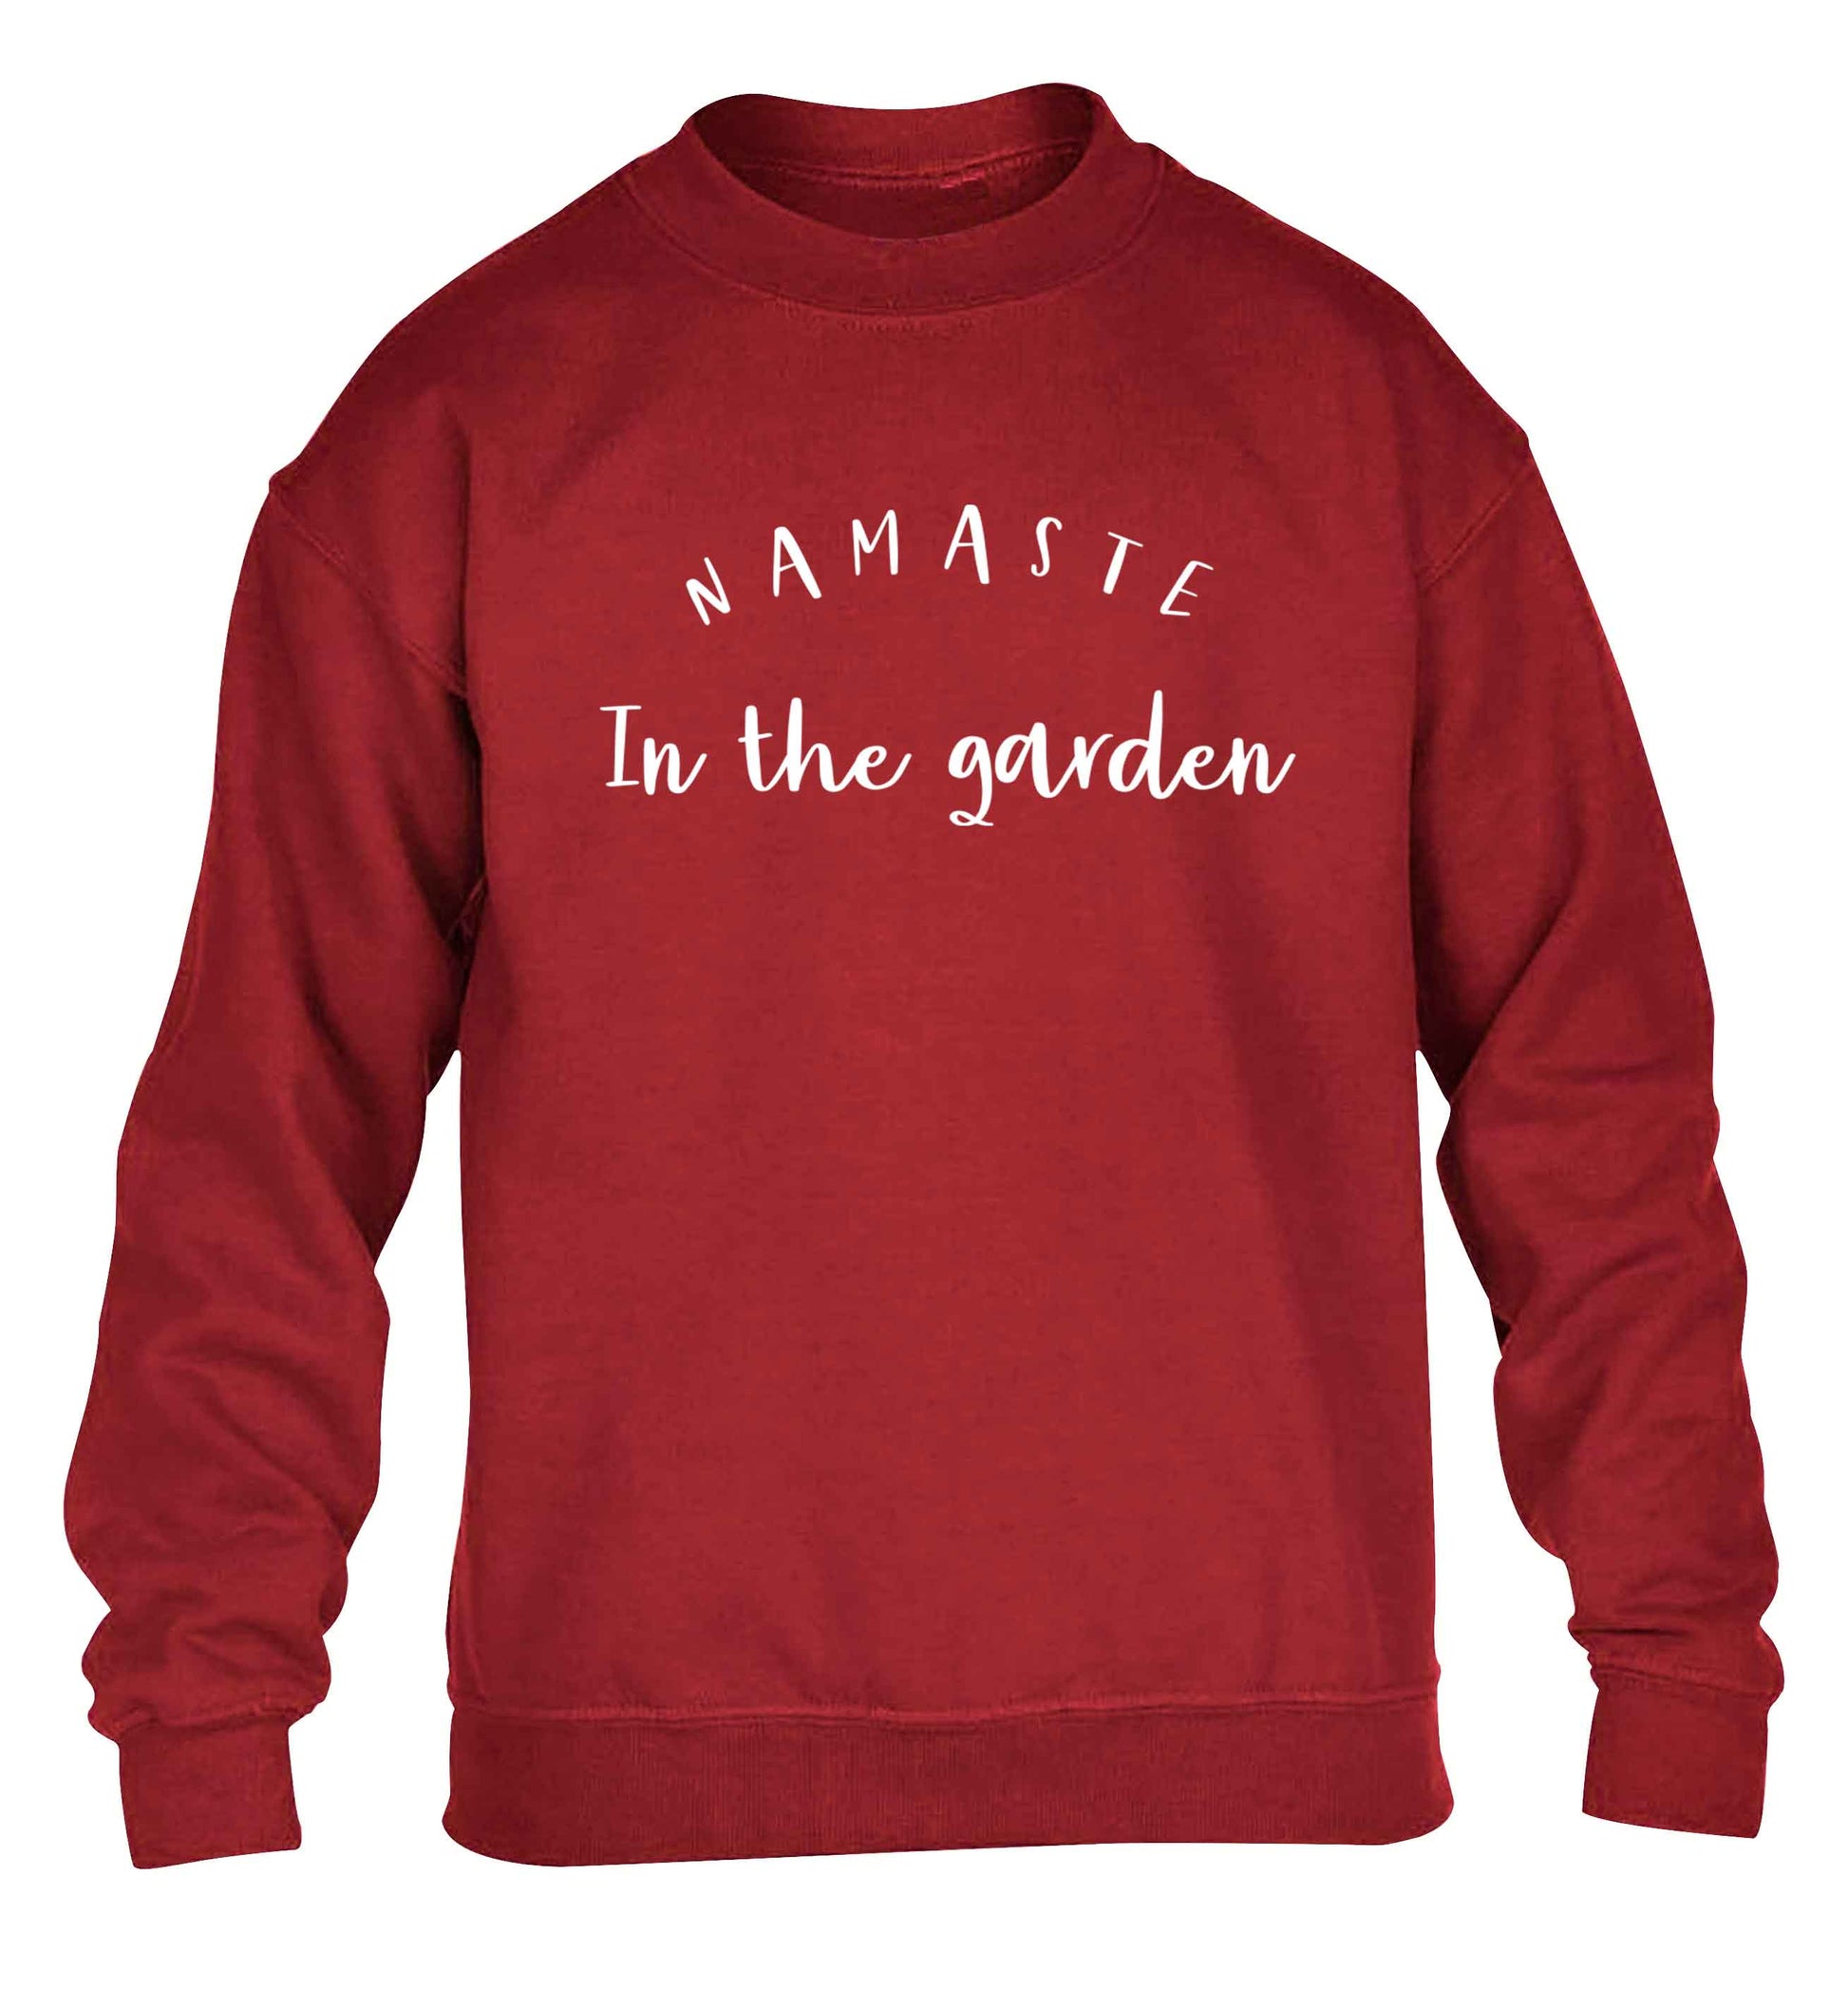 Namaste in the garden children's grey sweater 12-13 Years